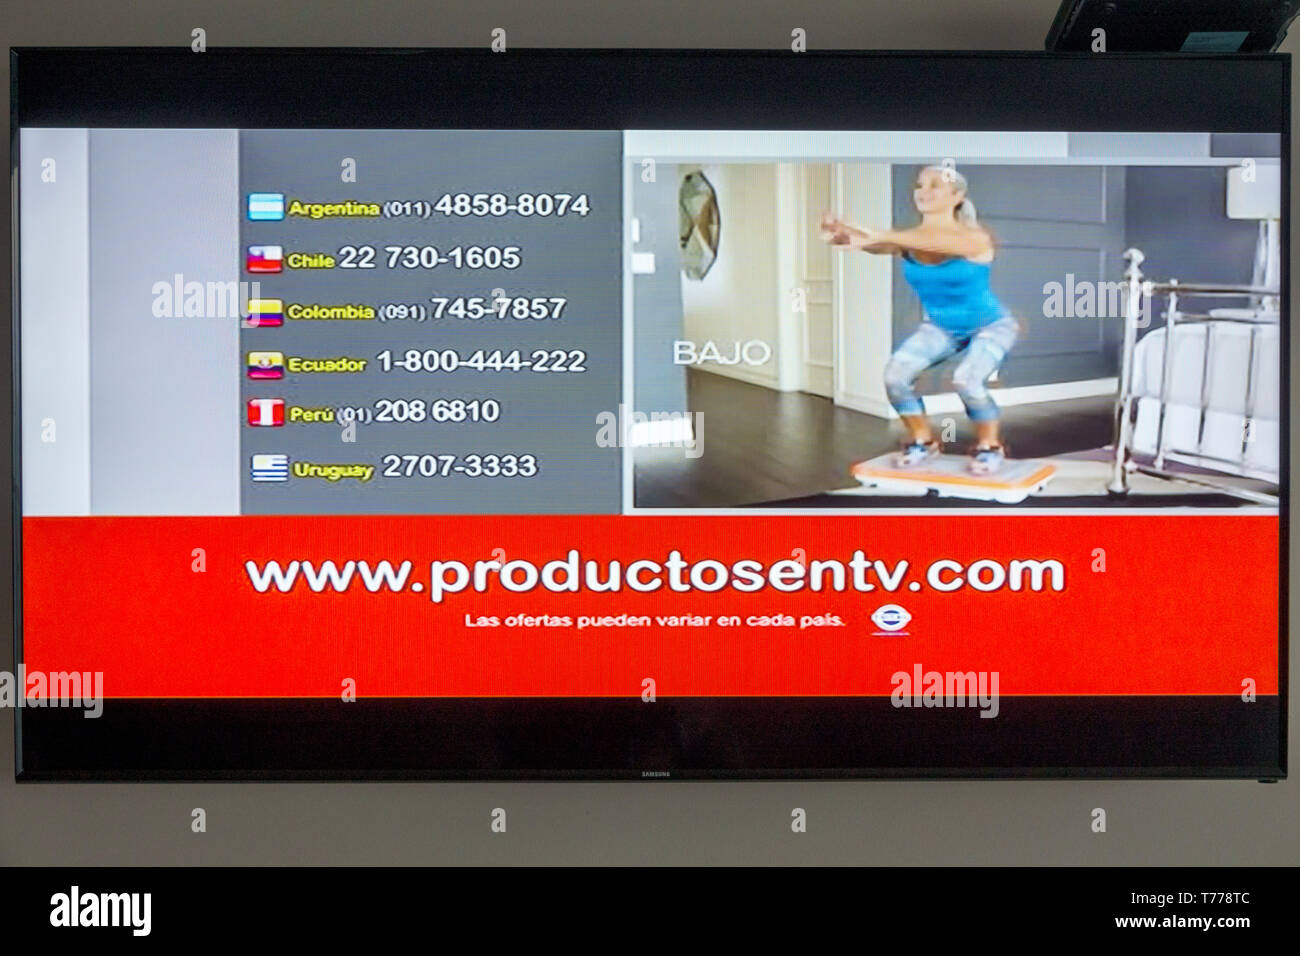 Cartagena colombia,TV monitor pantalla plana,www.productosentv.com,marketing,shopping canales,América Latina,telemarketing,viaje de visitantes Foto de stock